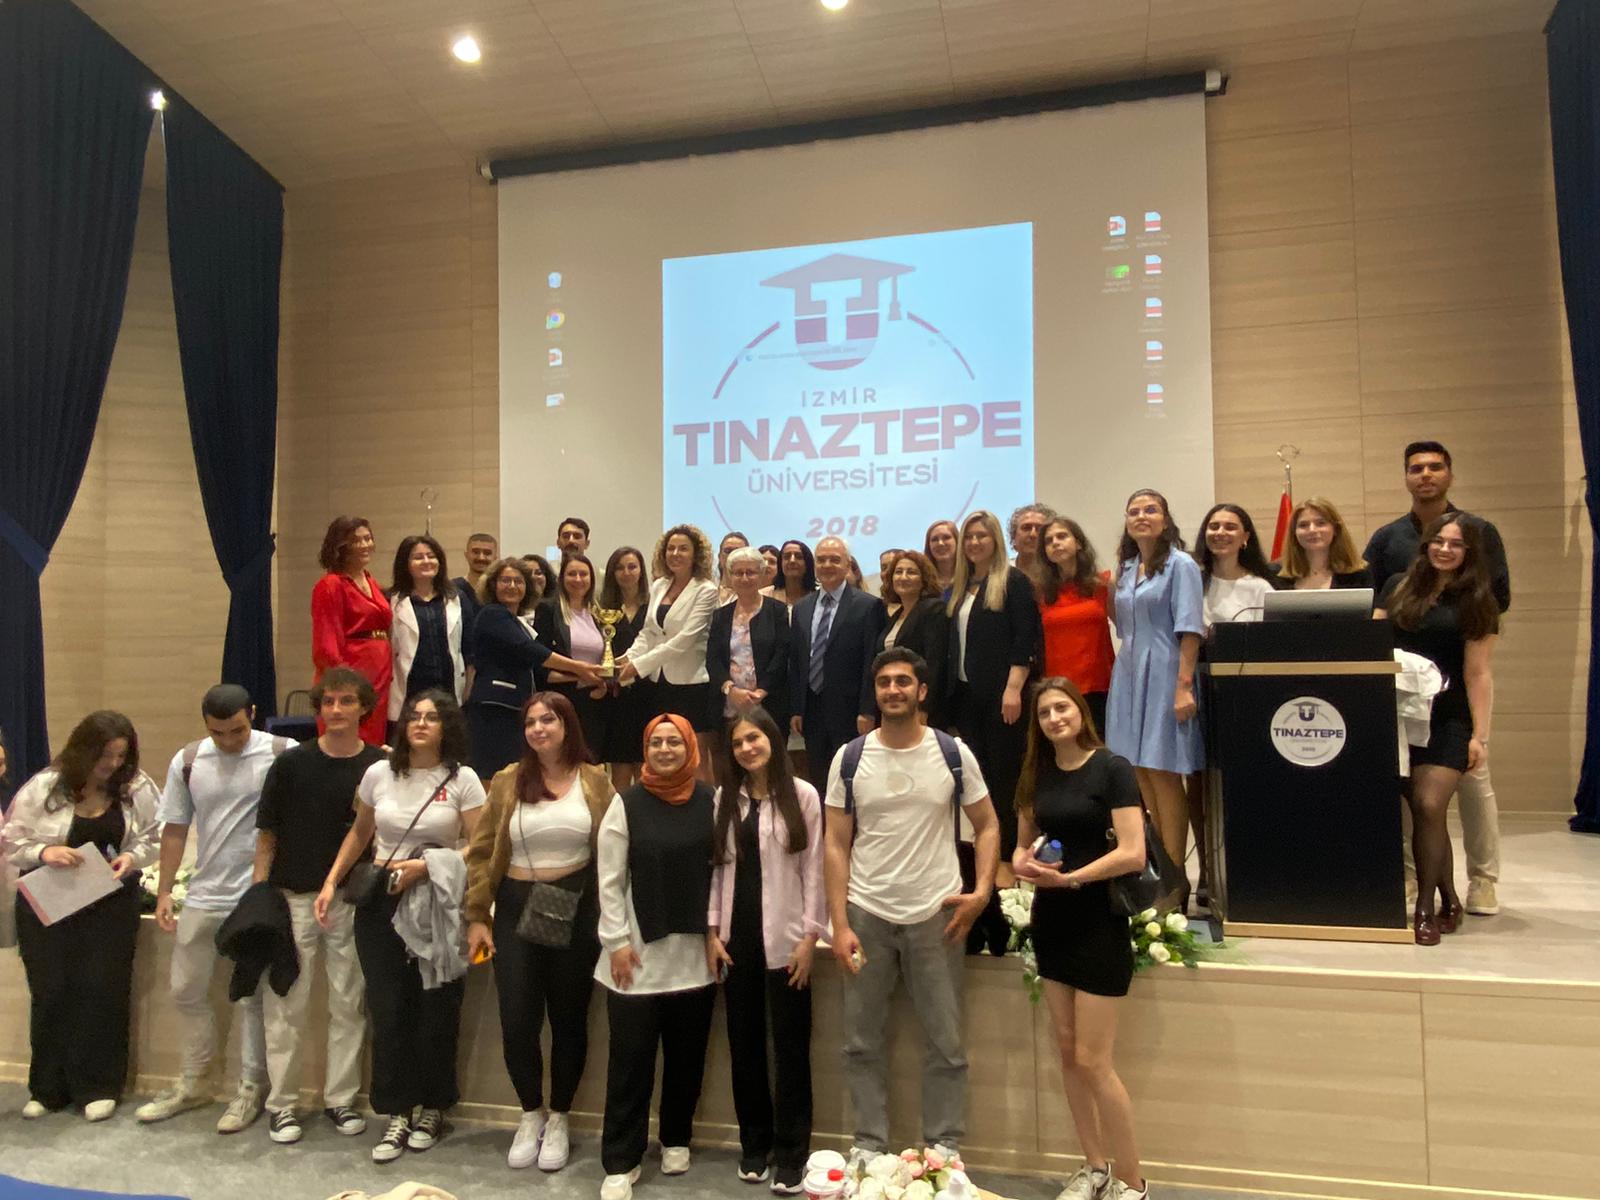 izmitinaz universitesi find and study 9 - Izmir Tınaztepe University